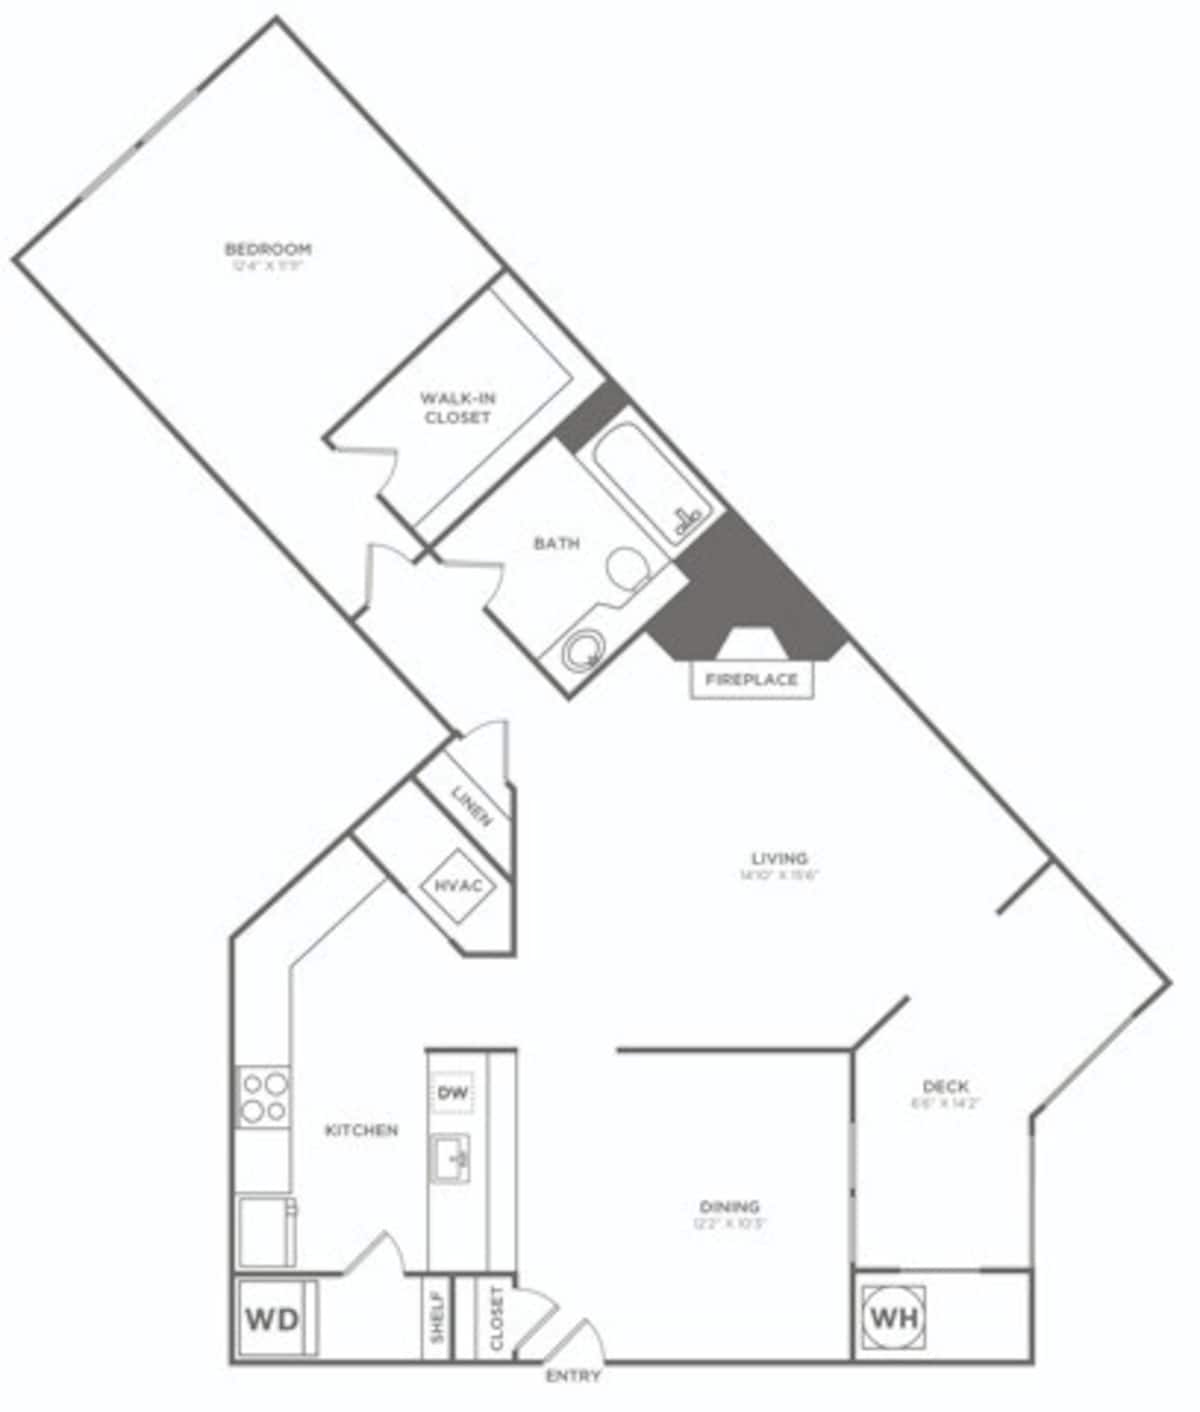 Floorplan diagram for One Bedroom One Bath (836 SF), showing 1 bedroom